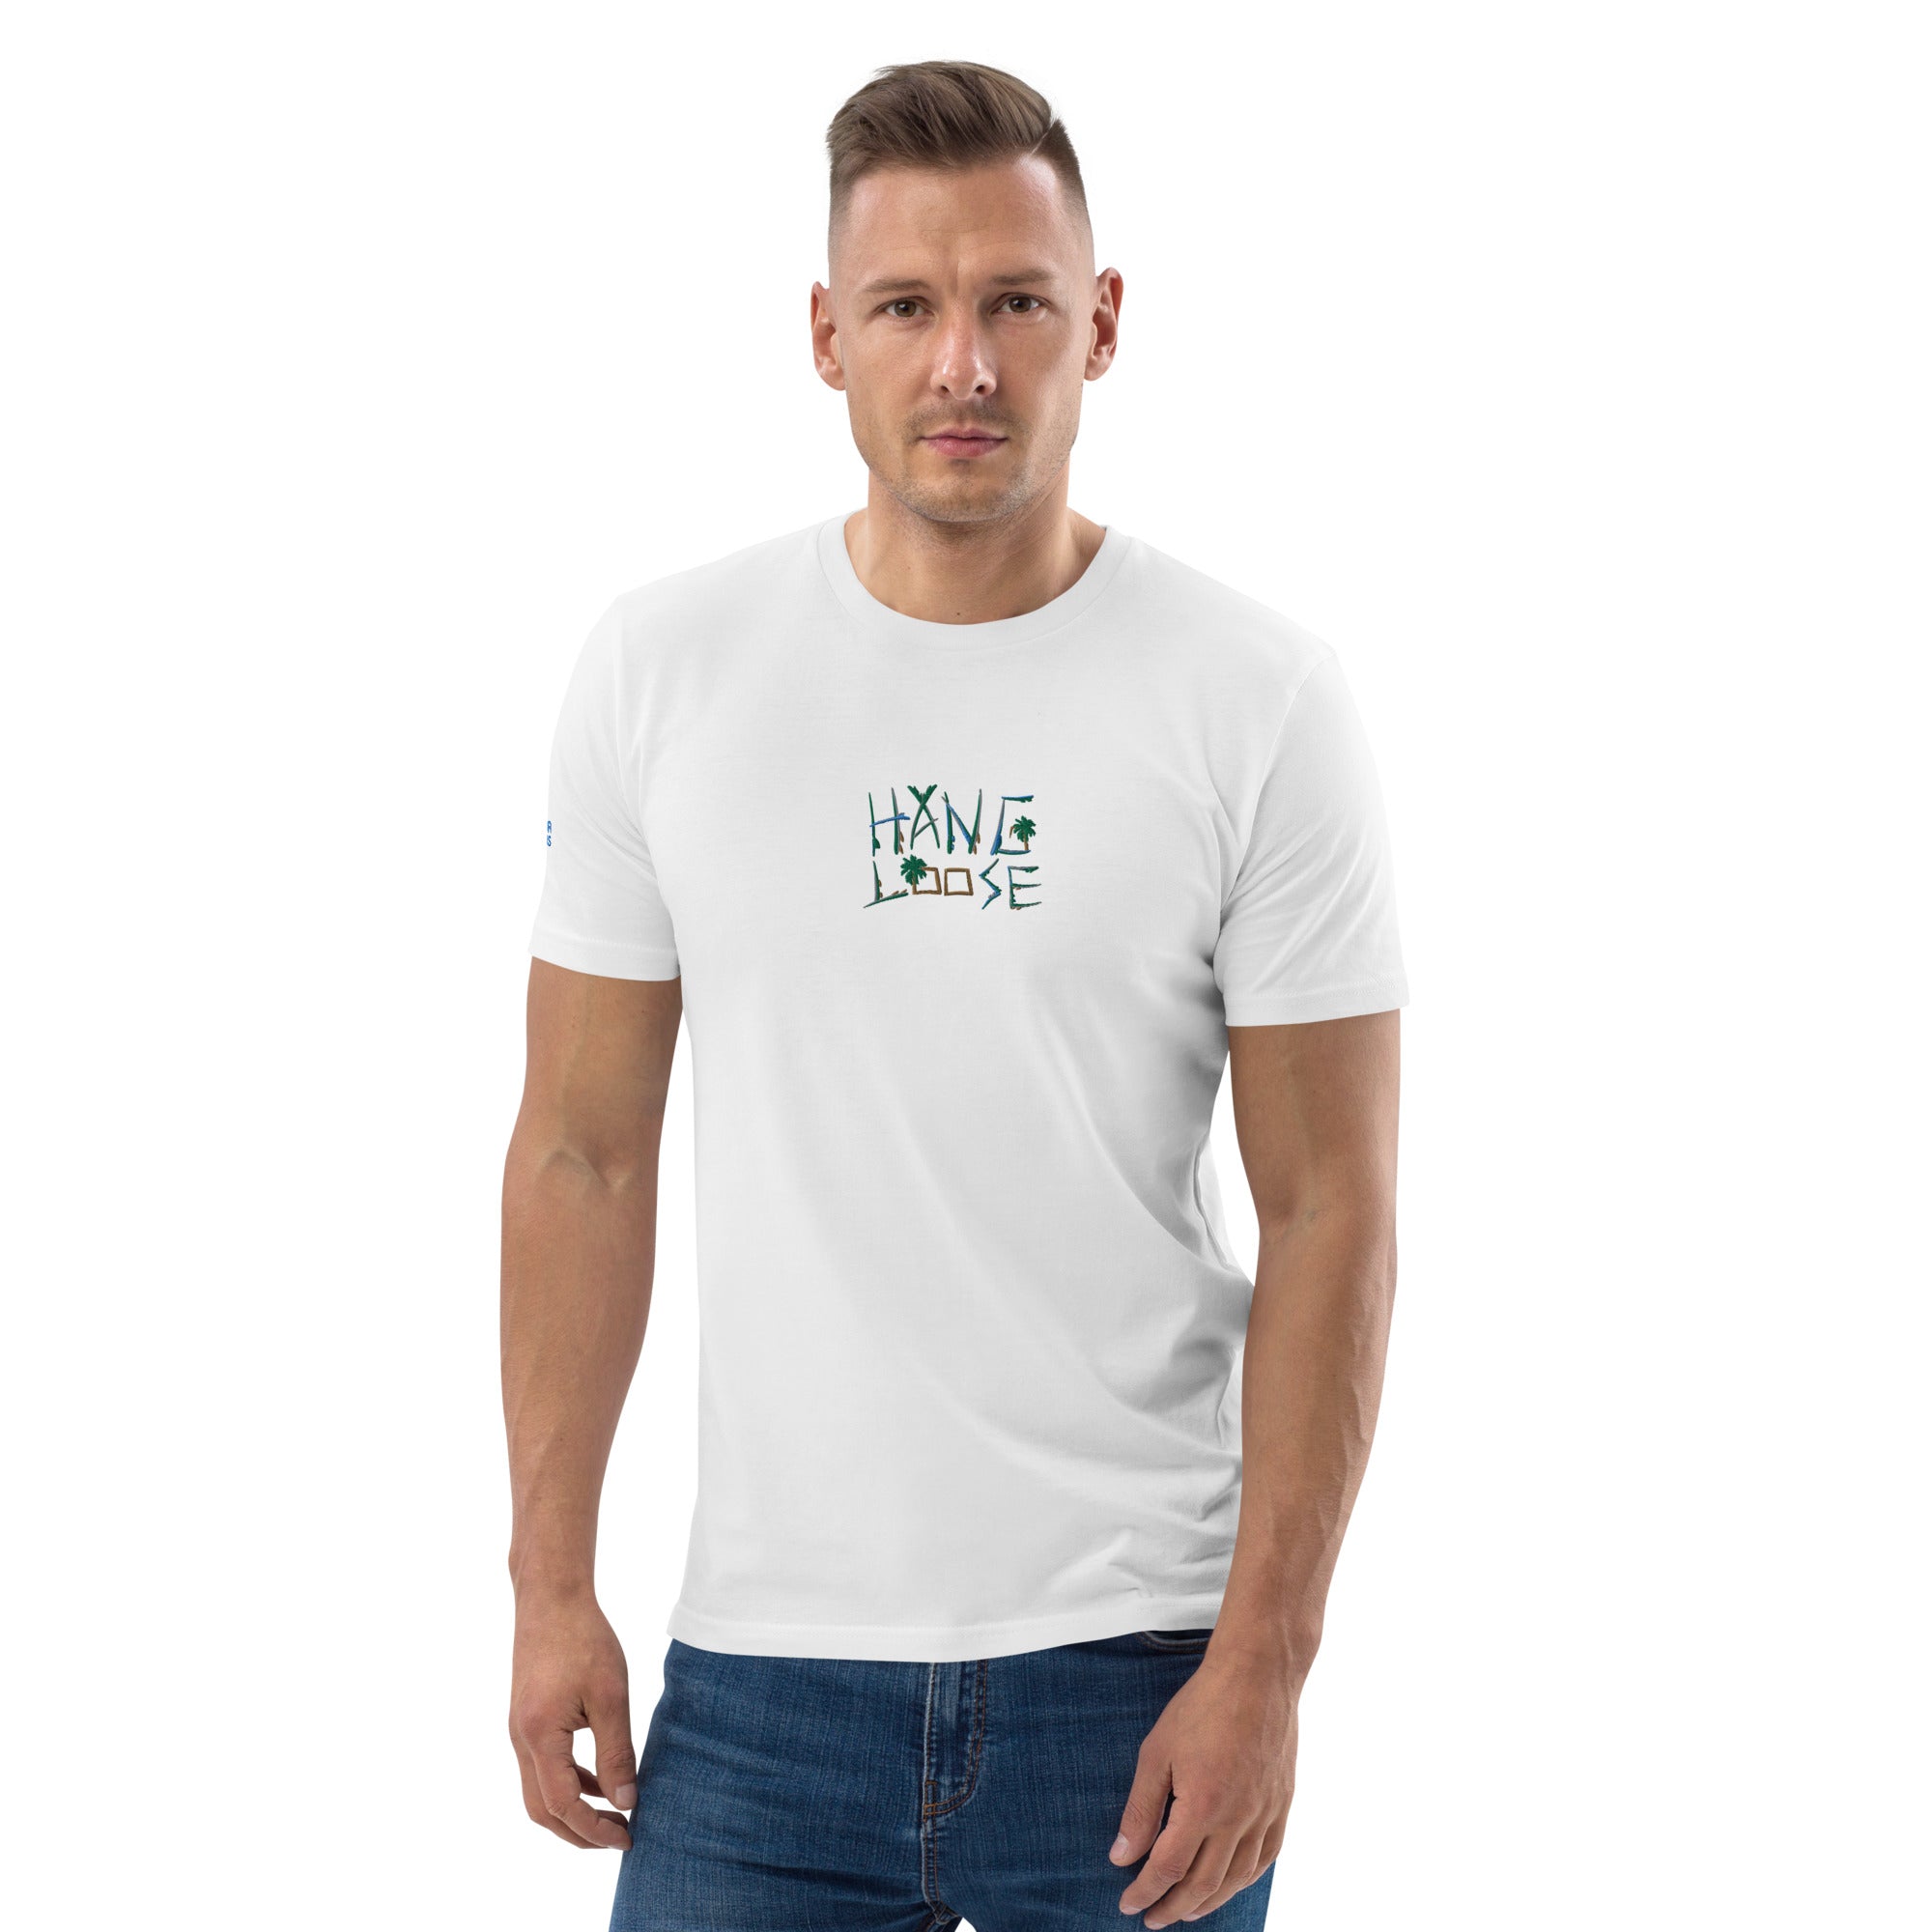 Hang-Loose-organic-shirt-AMORMARIS